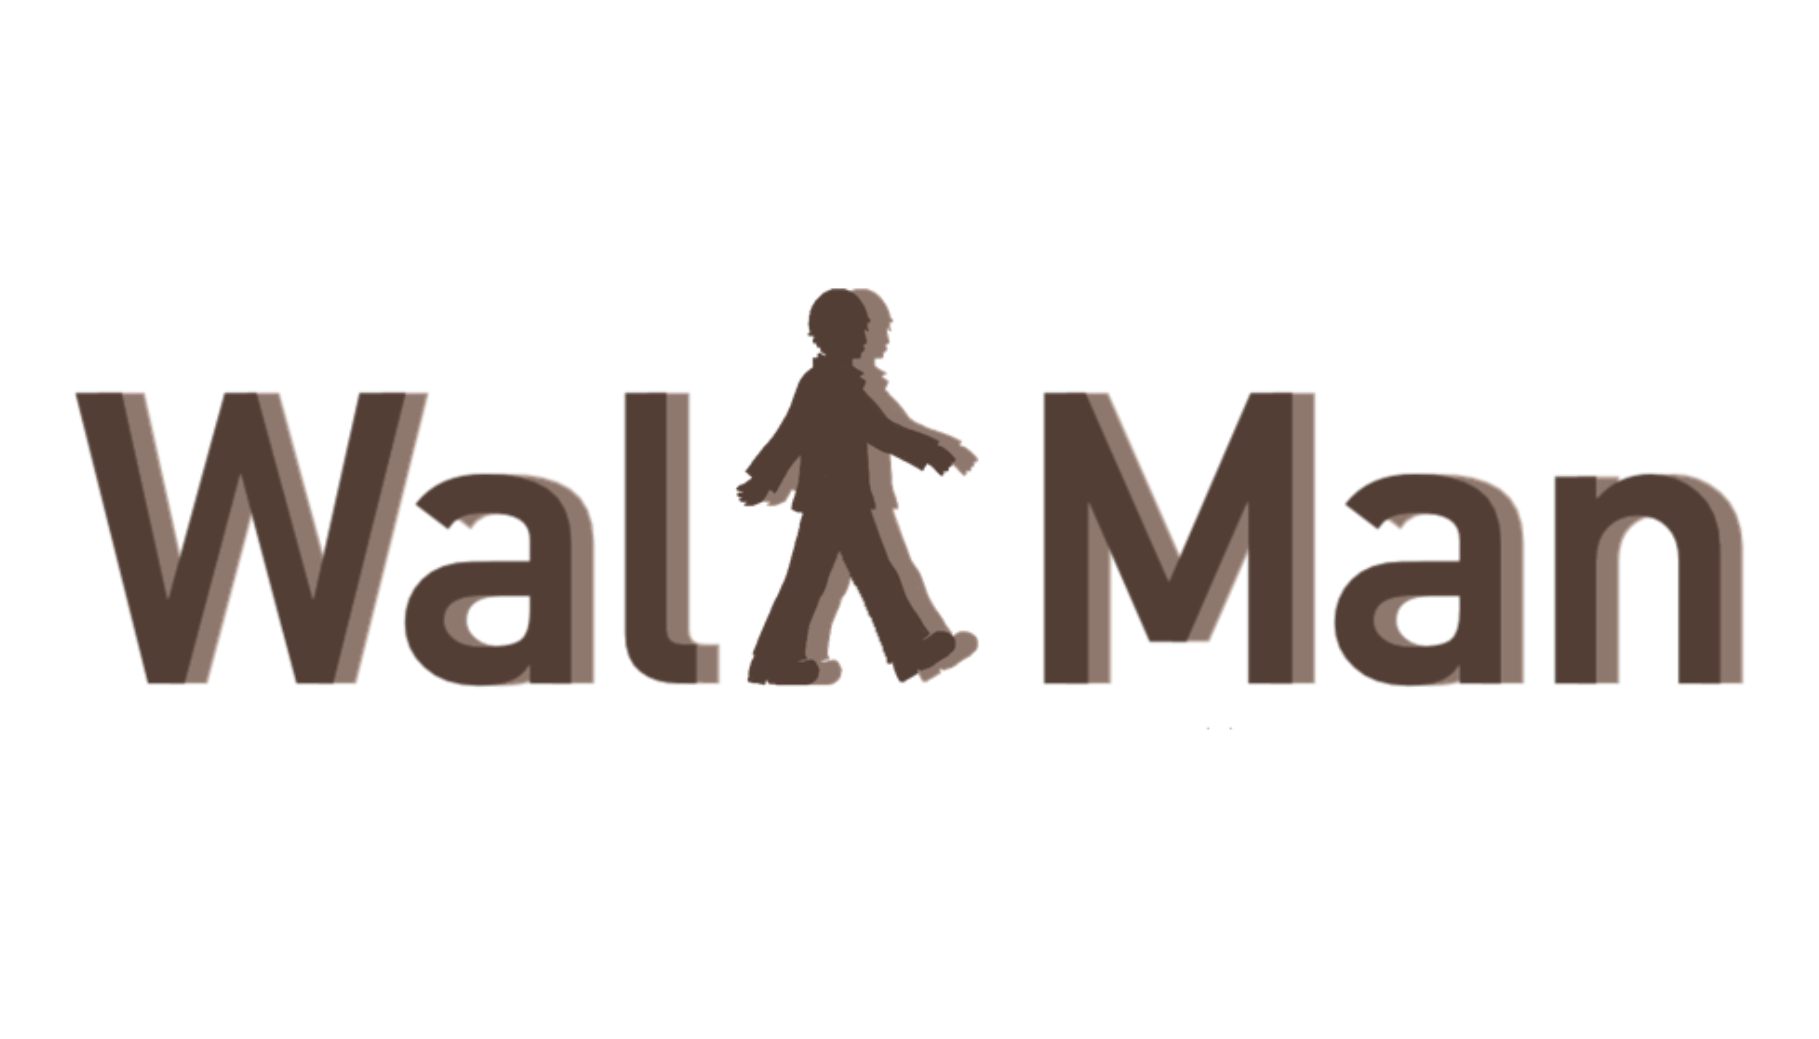 株式会社 walkman